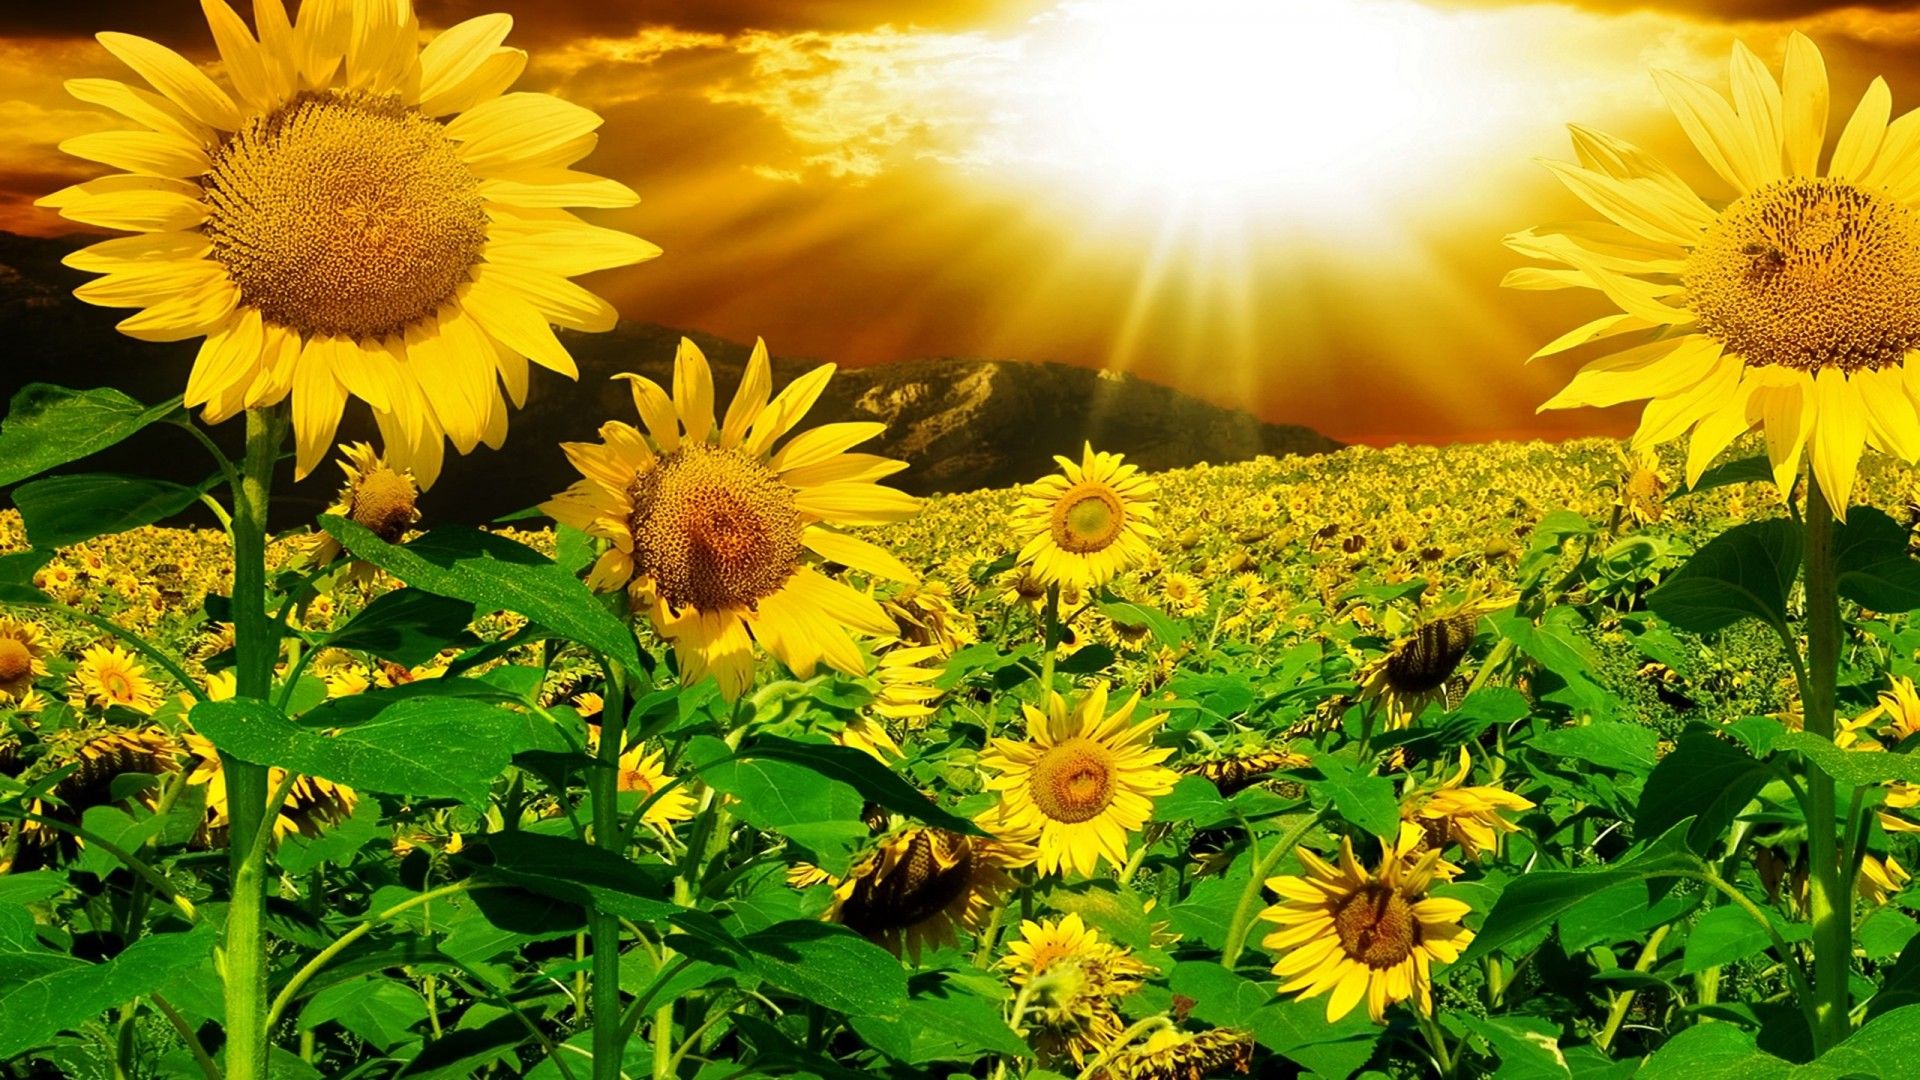 Sunflower Field background image